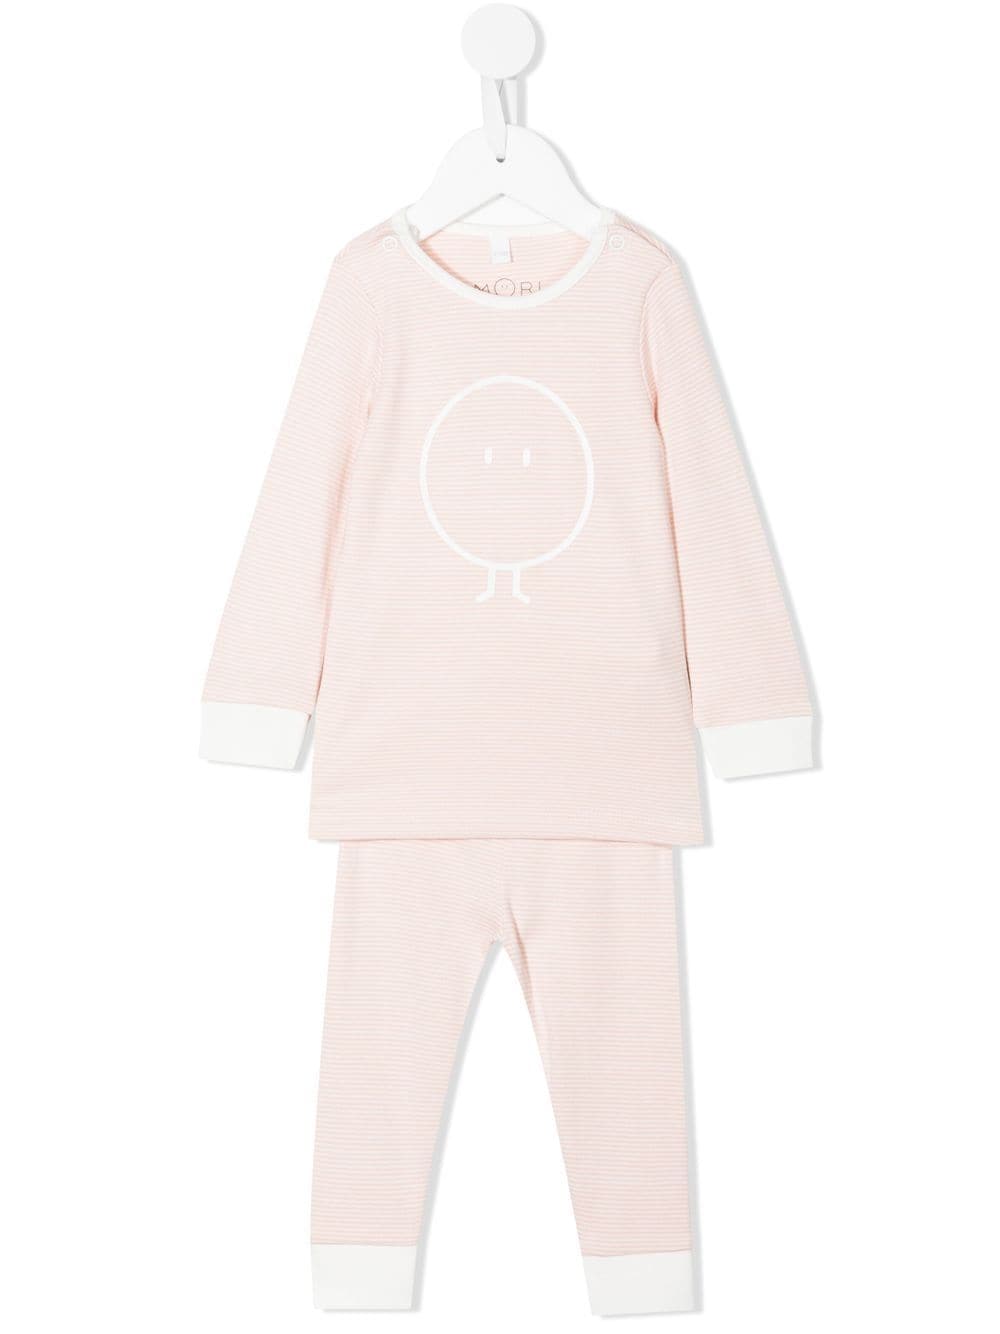 MORI embroidered-logo pajamas - Pink von MORI